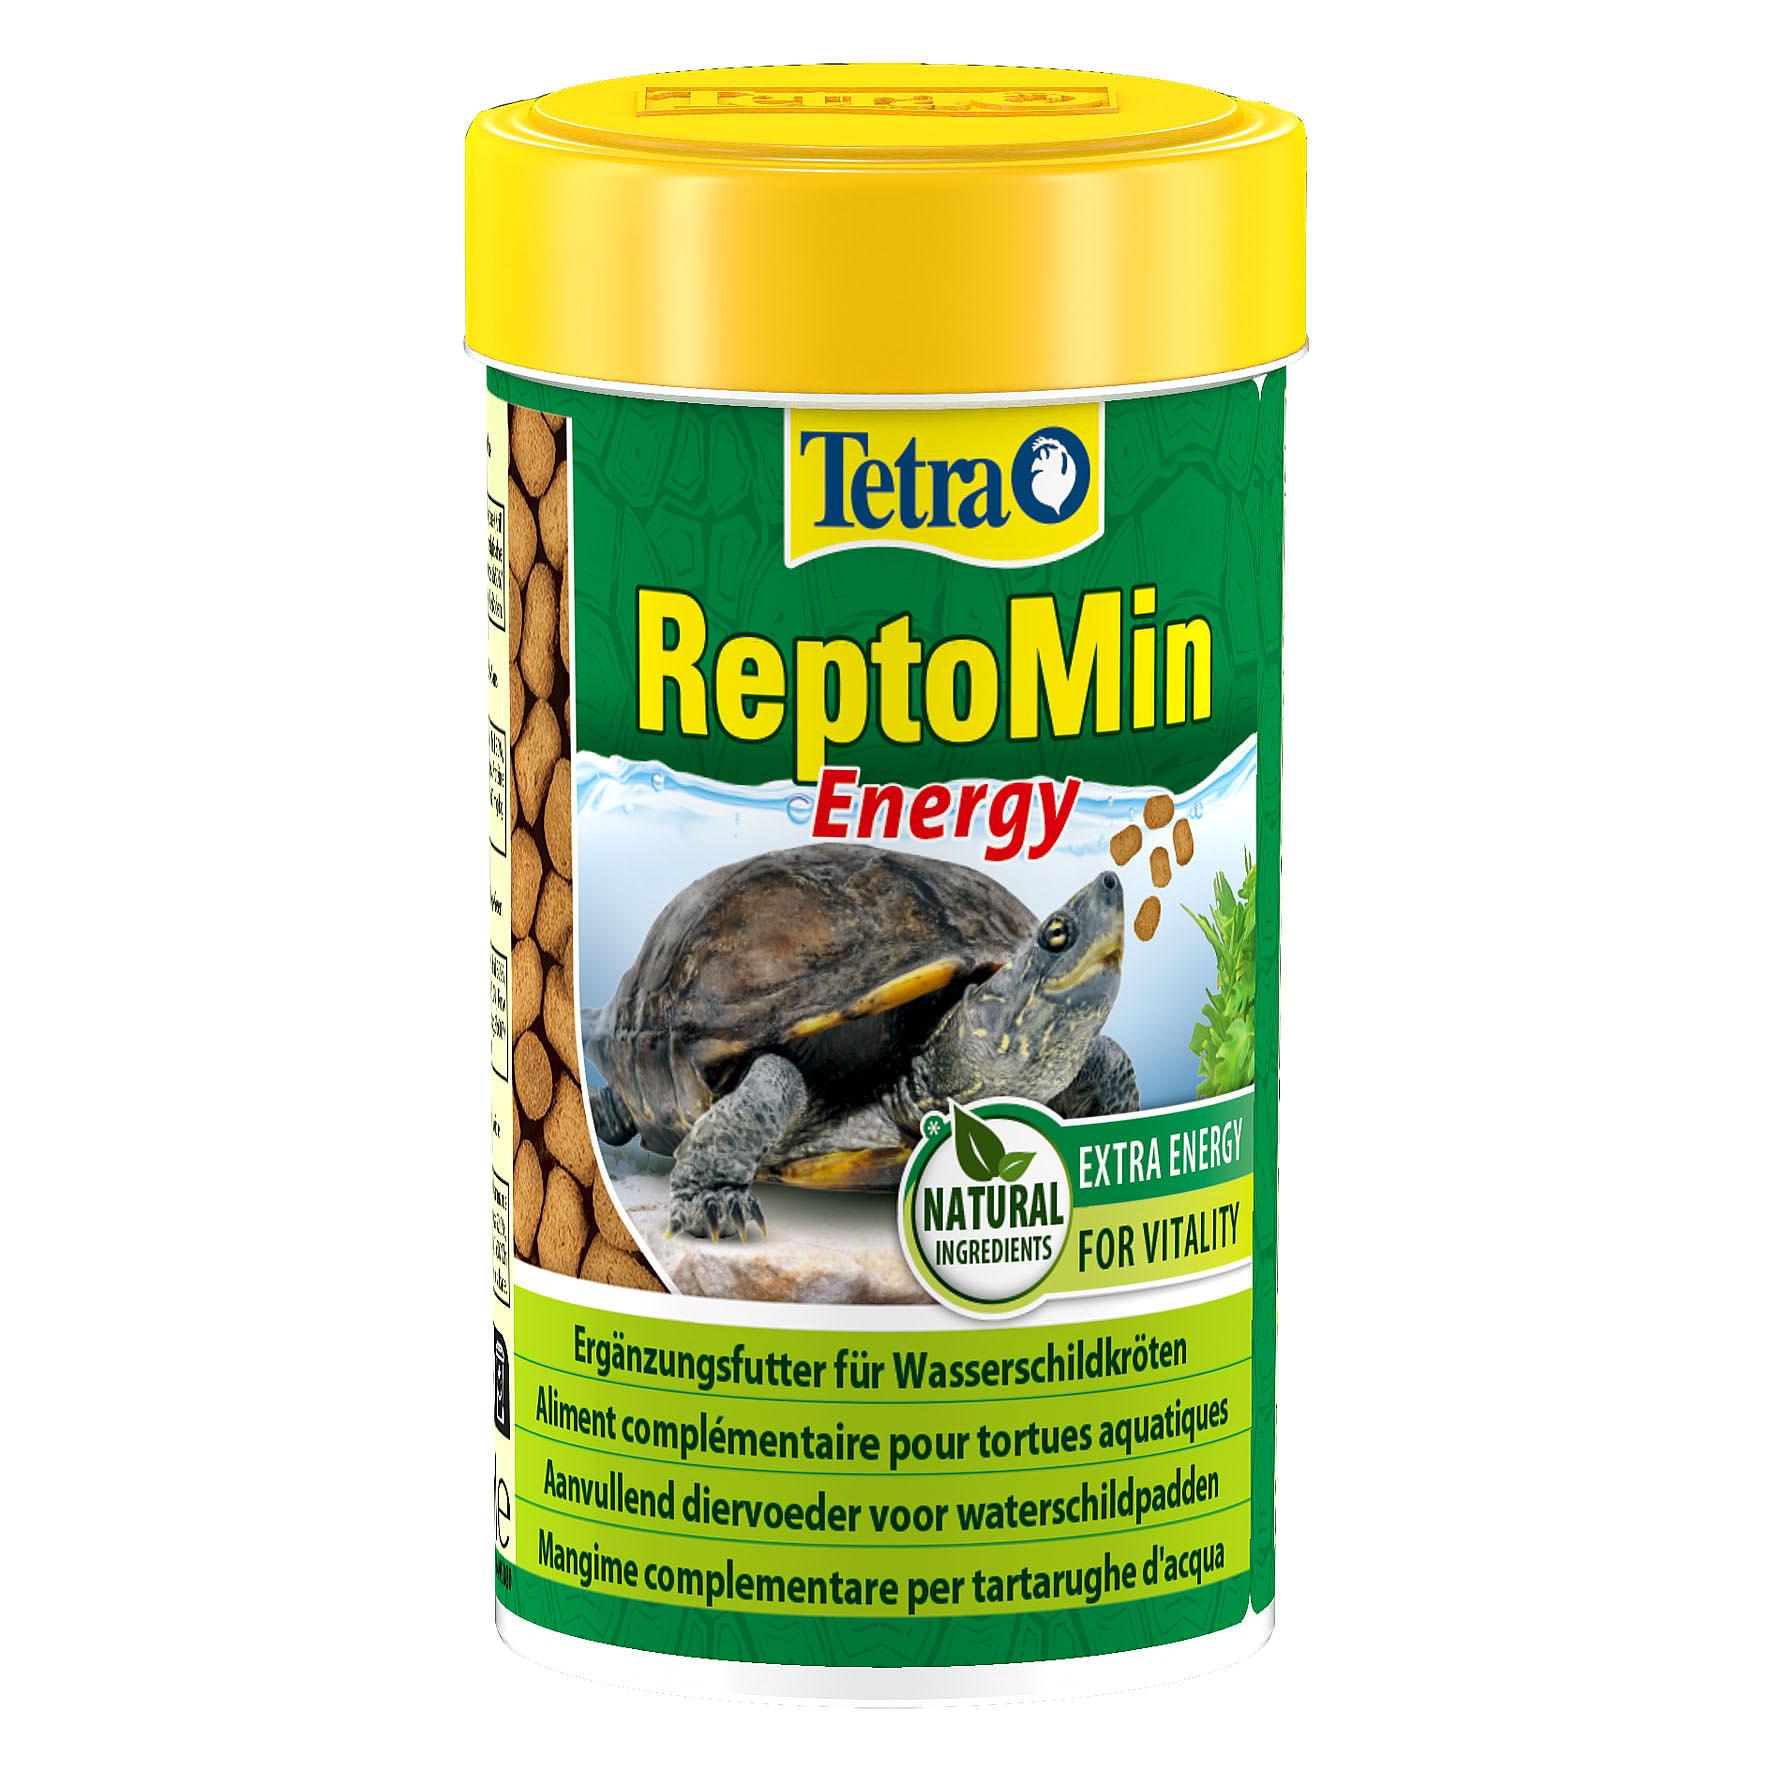 Tetra ReptoMin Energy